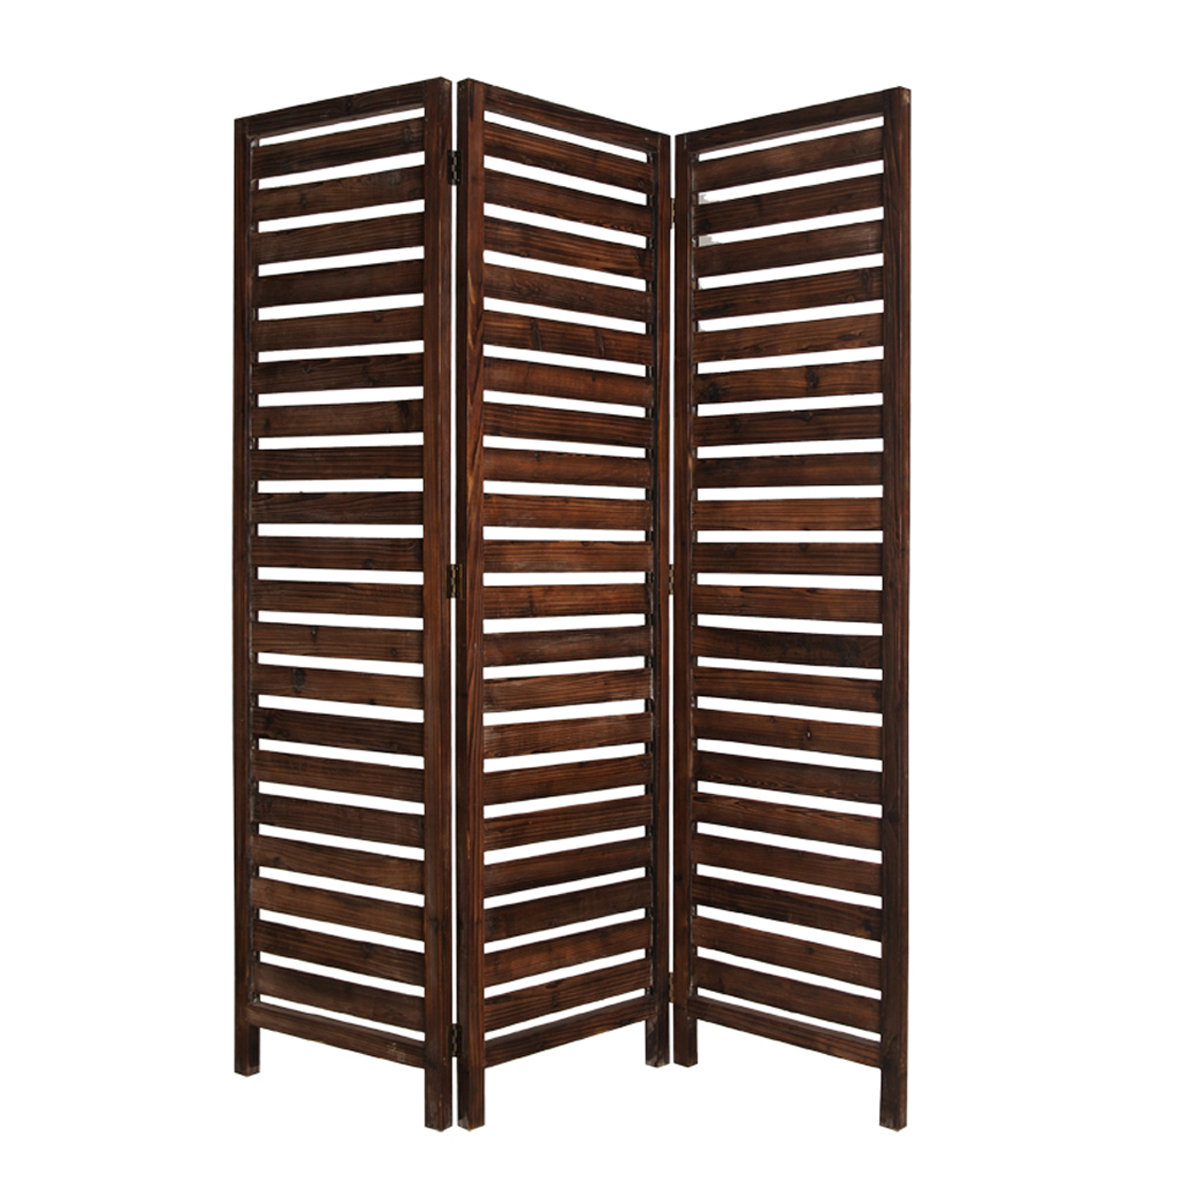 3 Panel Foldable Wooden Screen With Louver Pattern, Dark Brown- Saltoro Sherpi